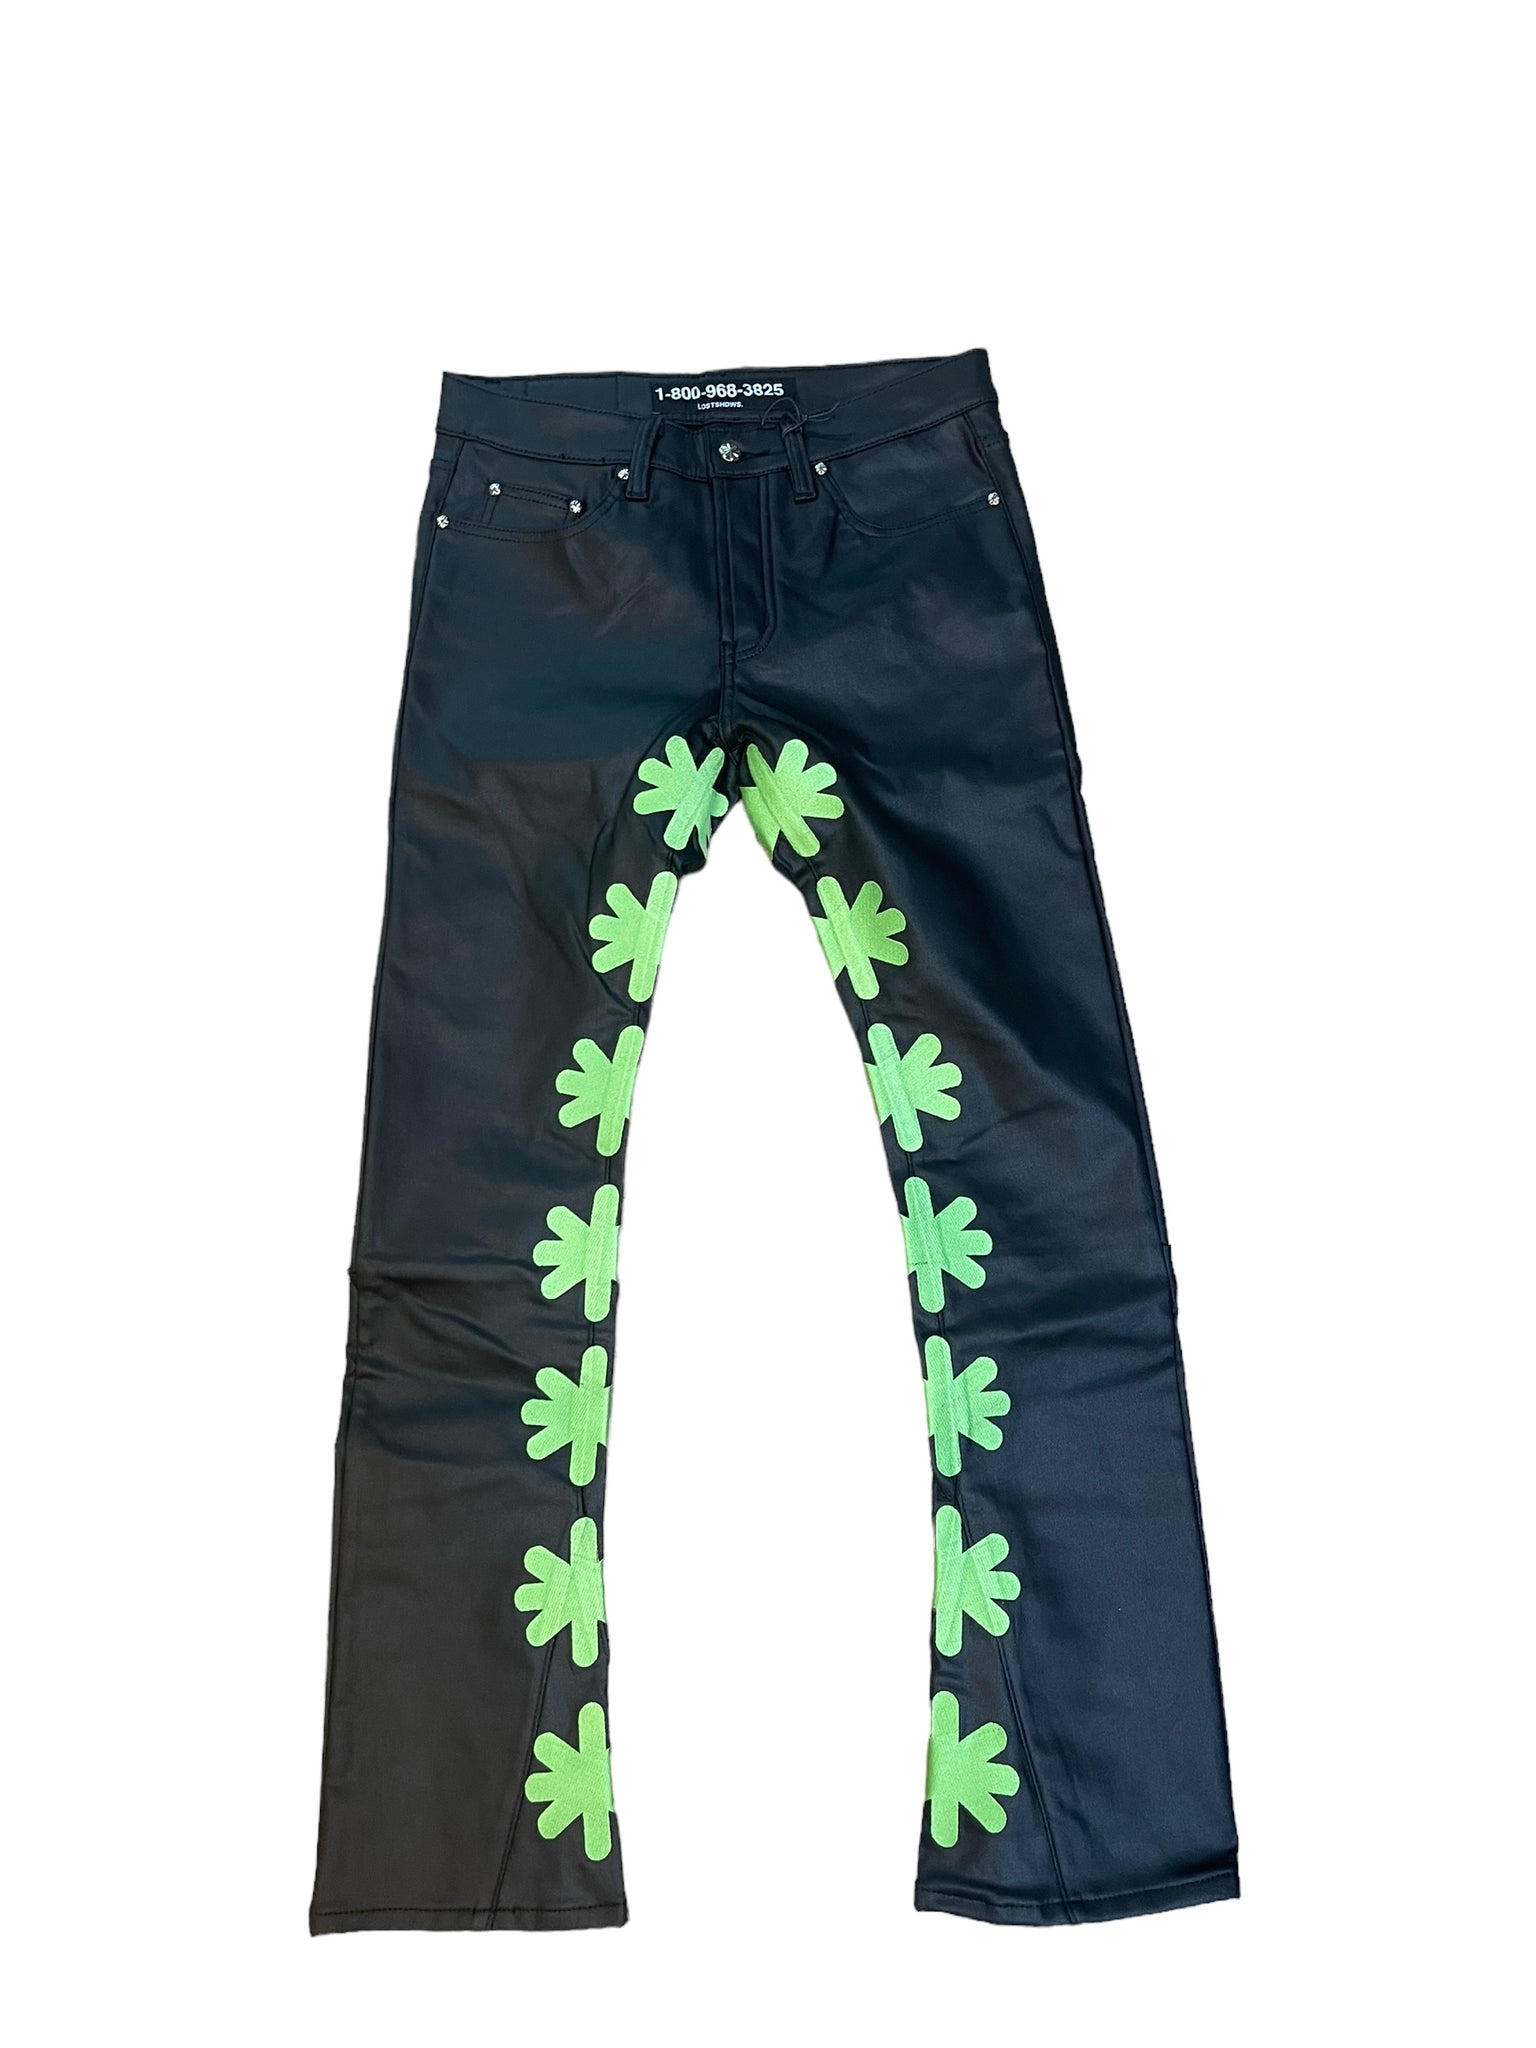 Lost Shdws Wax Pants "Slime Green"